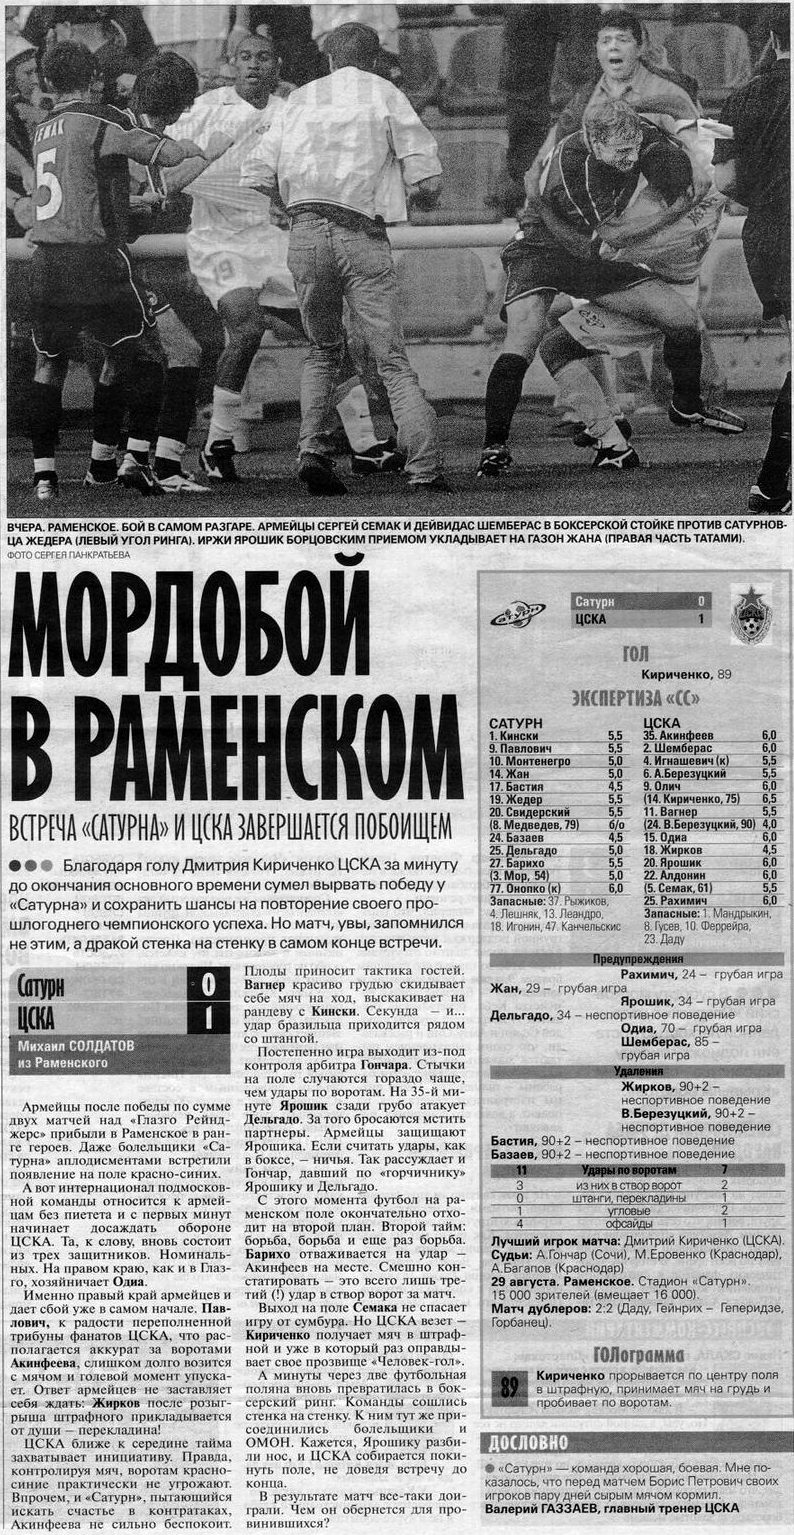 2004-08-29.Saturn-CSKA.3